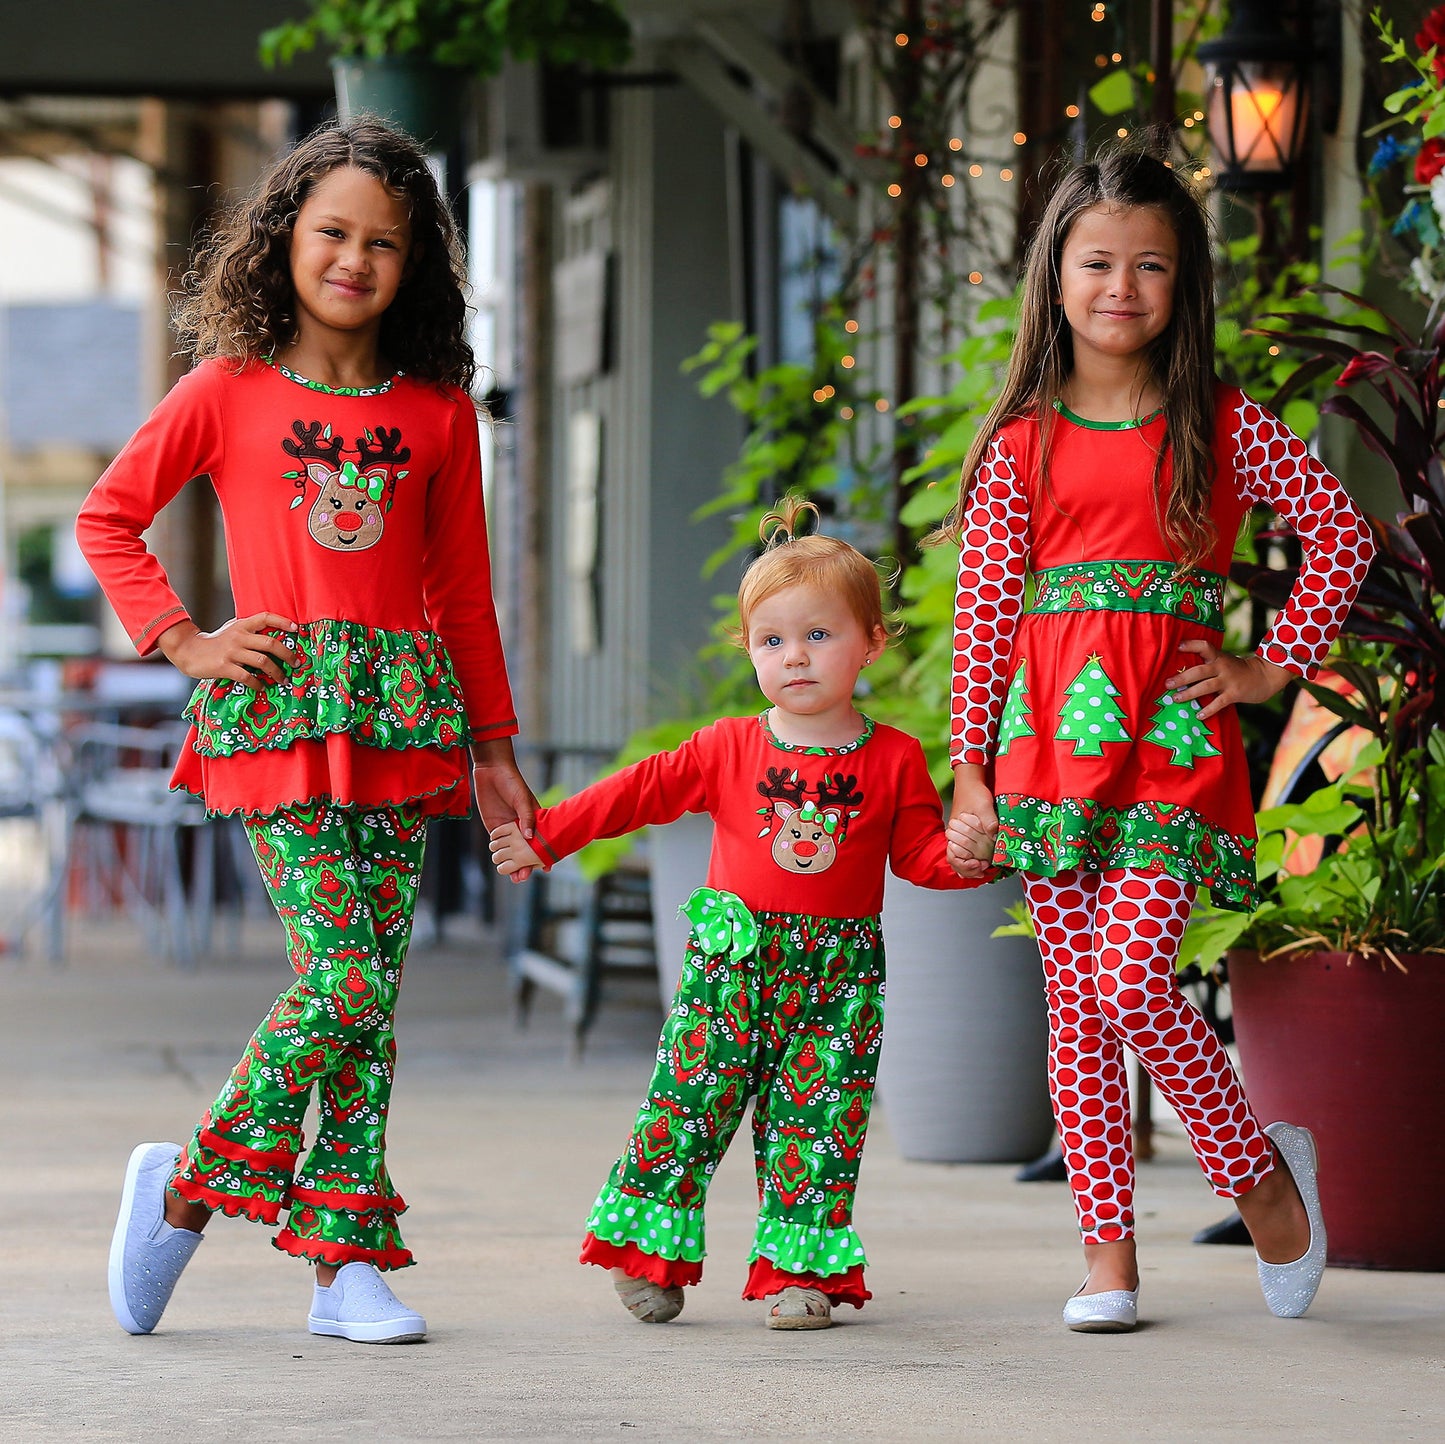 AnnLoren Girls Boutique Winter Holiday Red Green Damask Dress and Legging Set